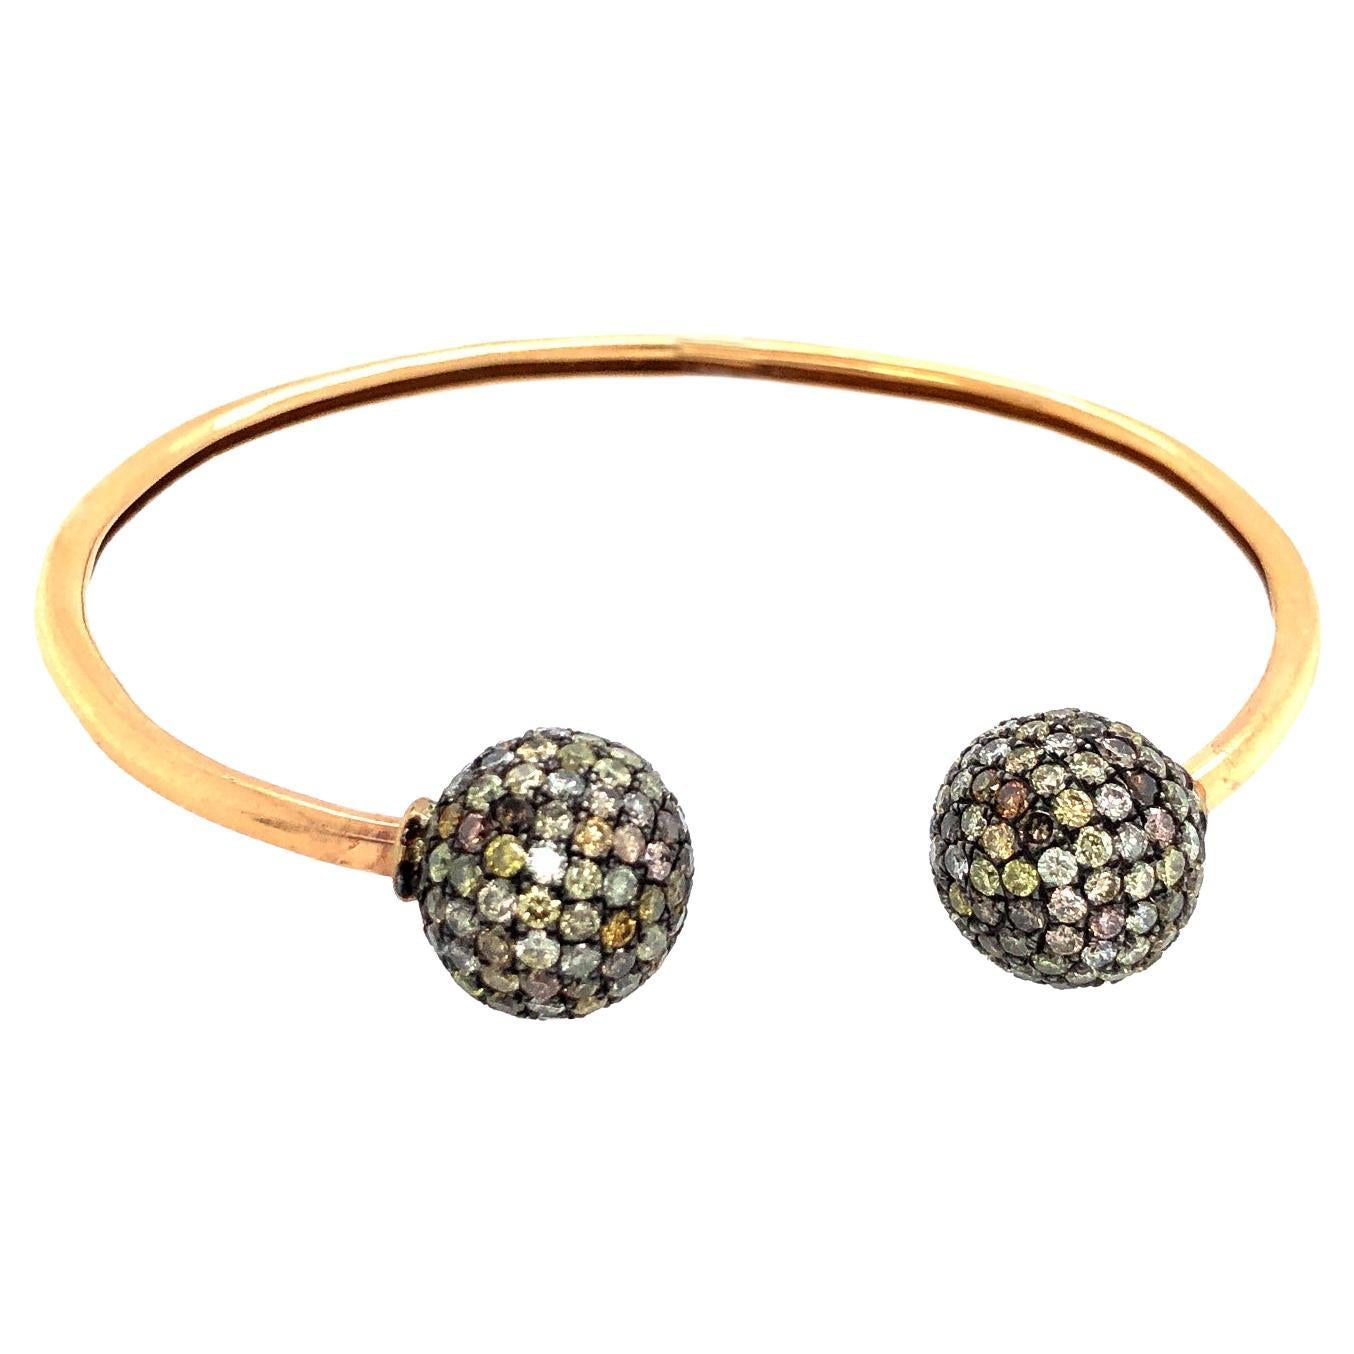 Fancy Pave Diamond Ball Adjustable Bracelet Made In 18k Gold & Silver For Sale